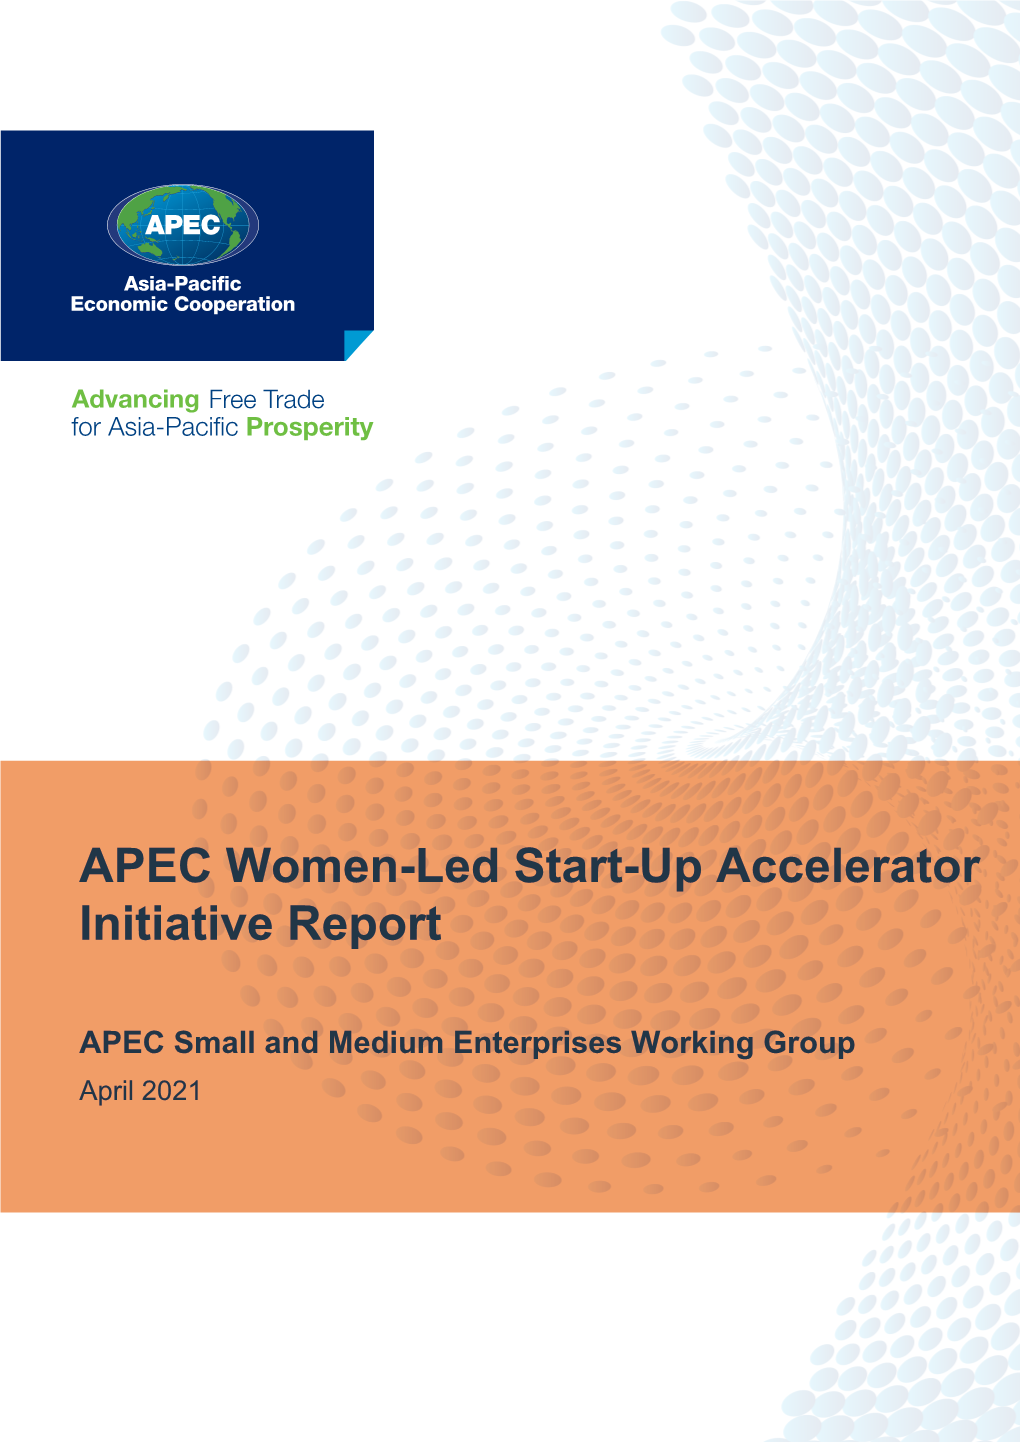 APEC Women-Led Start-Up Accelerator Initiative Report